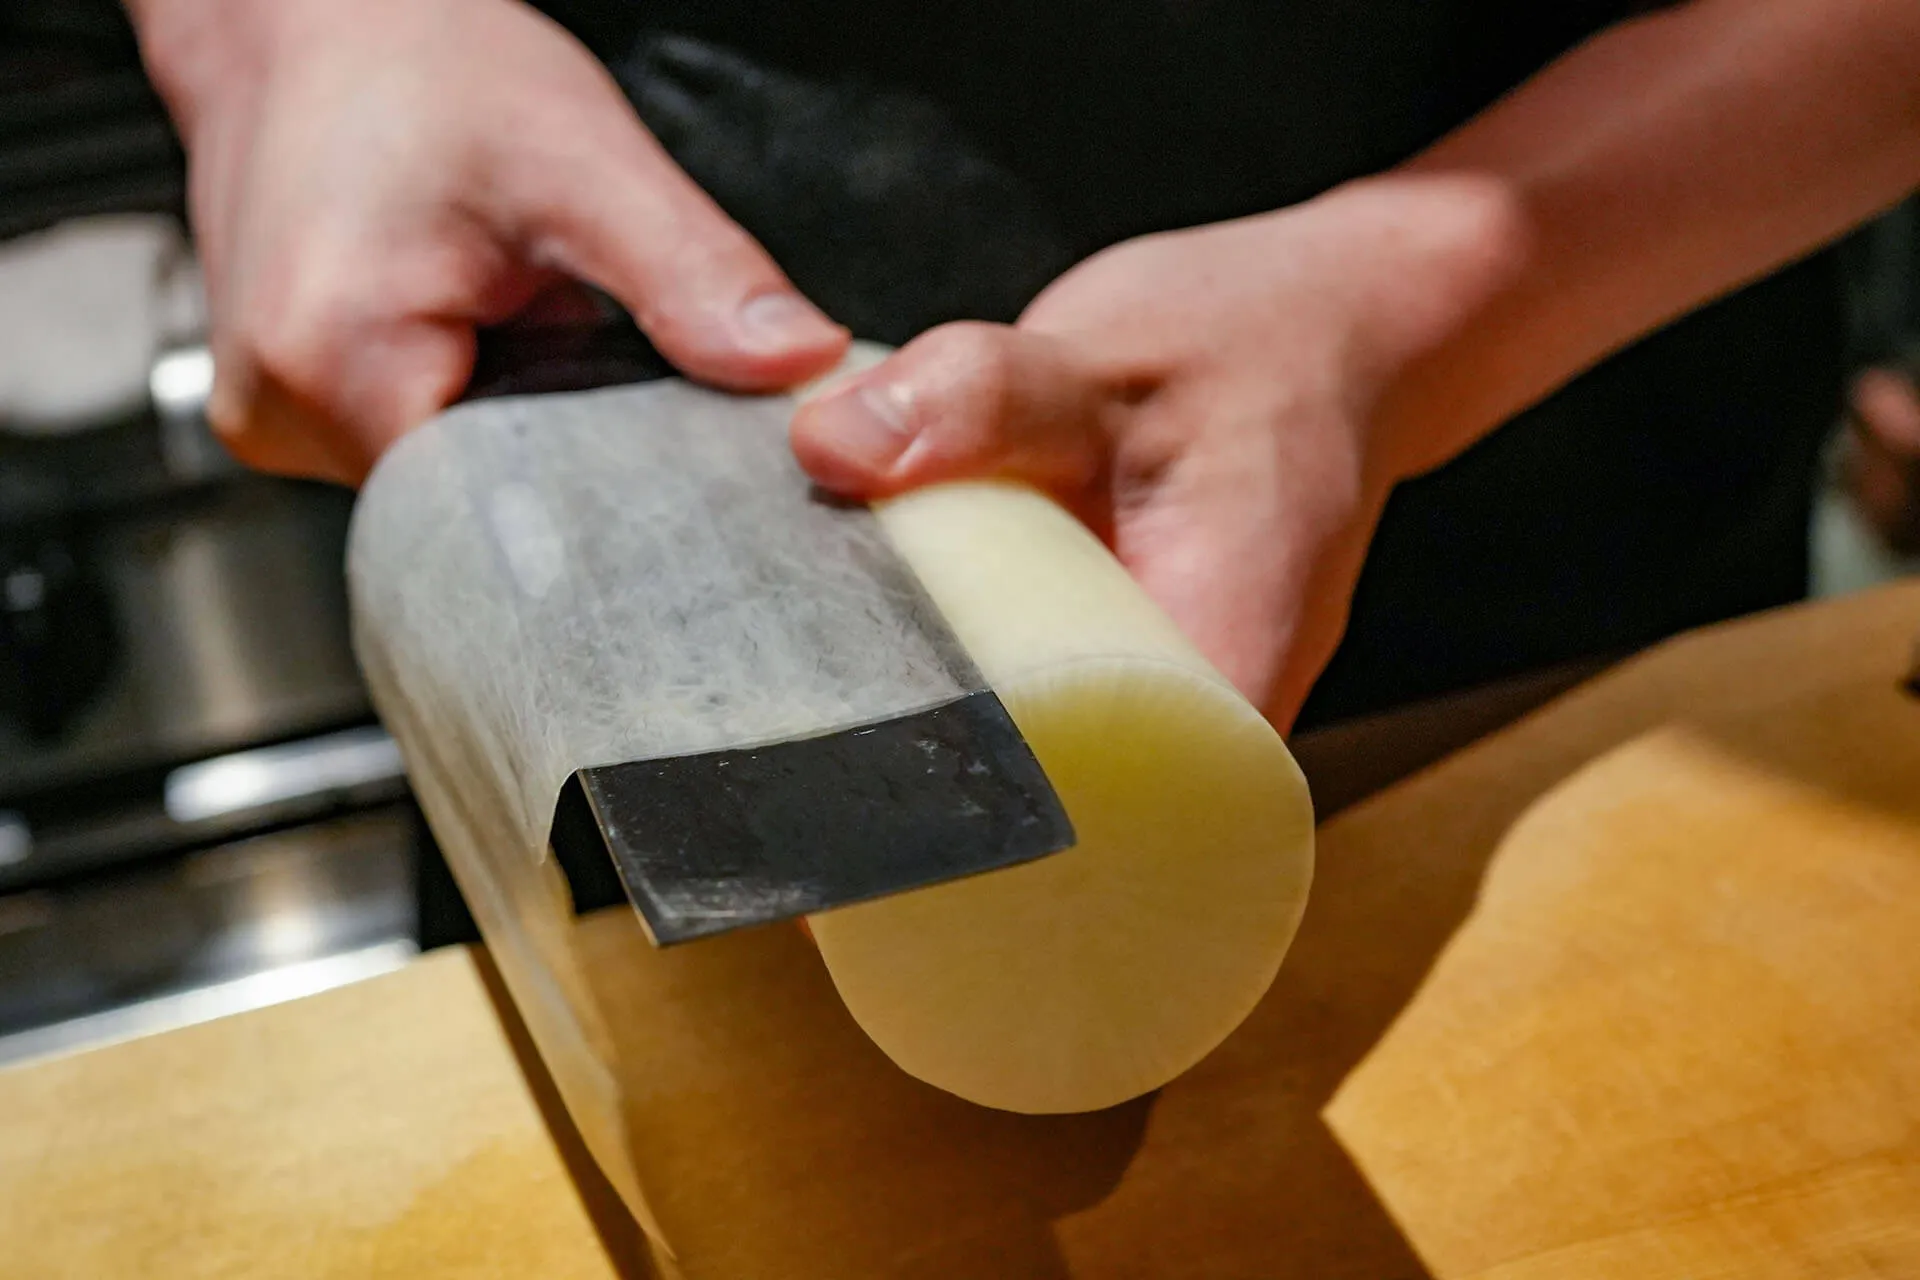 Japanese kitchen knives skills